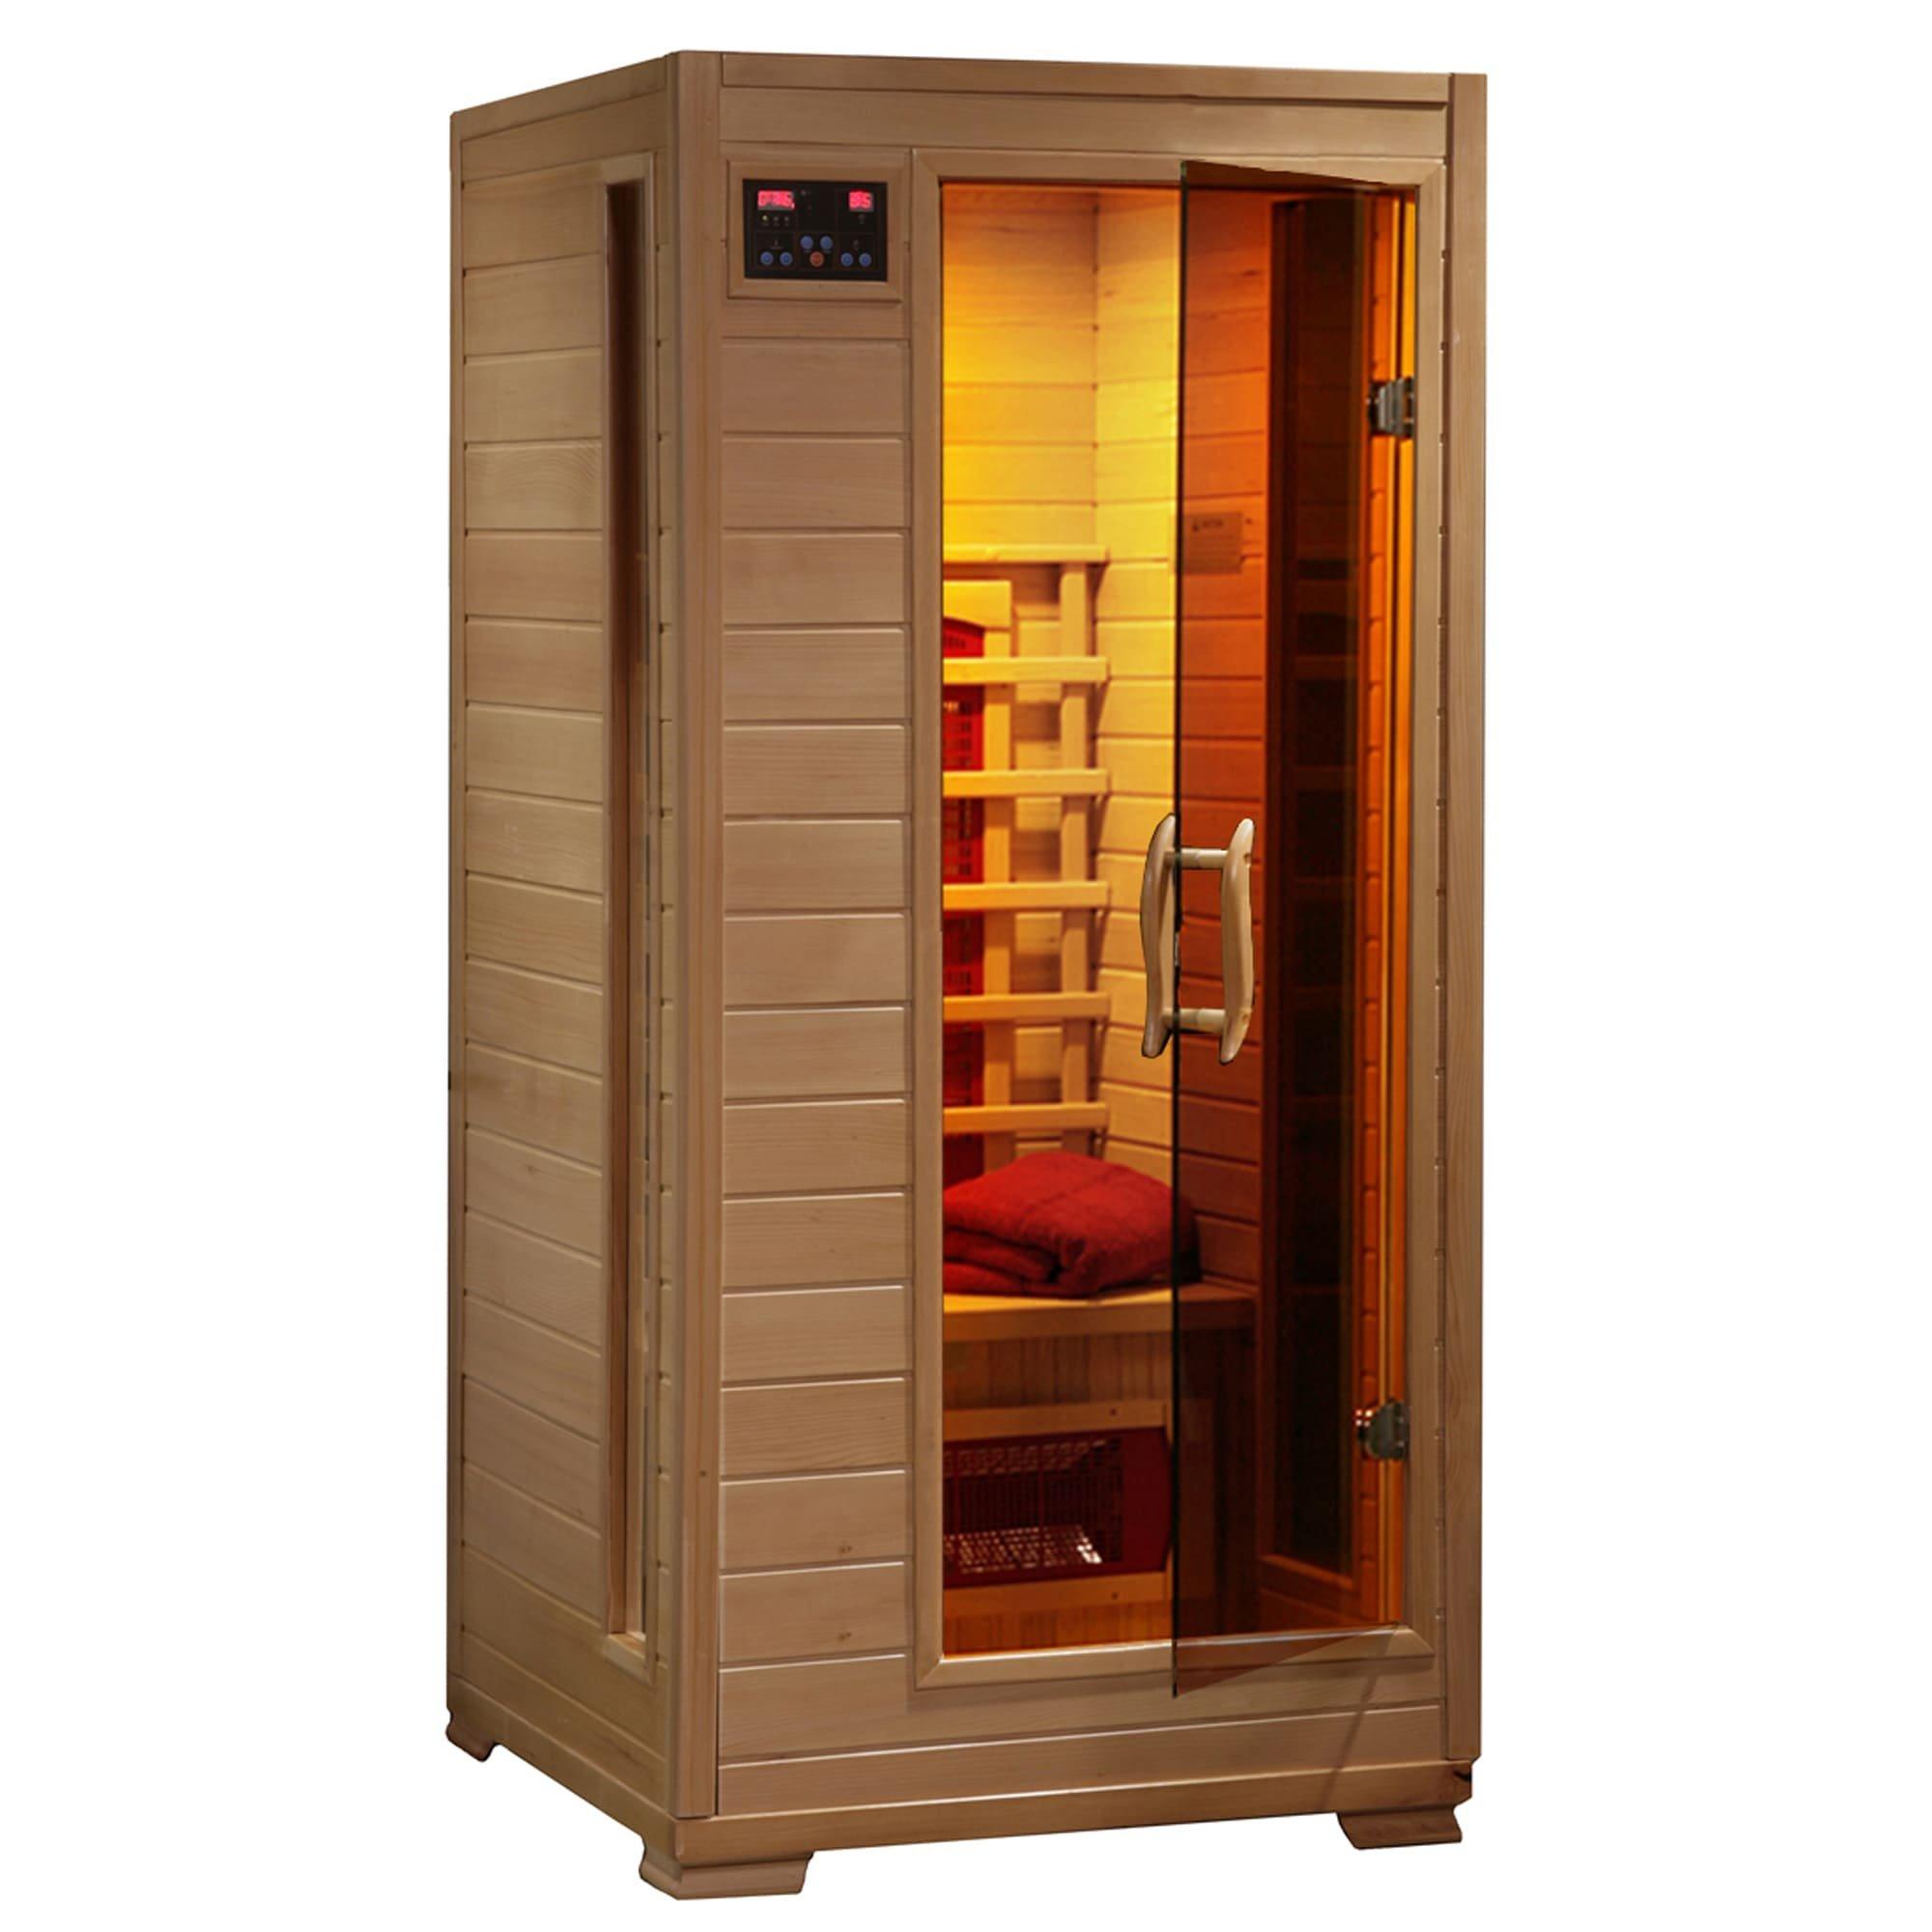 Heatwave  Buena Vista 1-2 Person Hemlock Infrared Sauna w 3 Ceramic Heaters